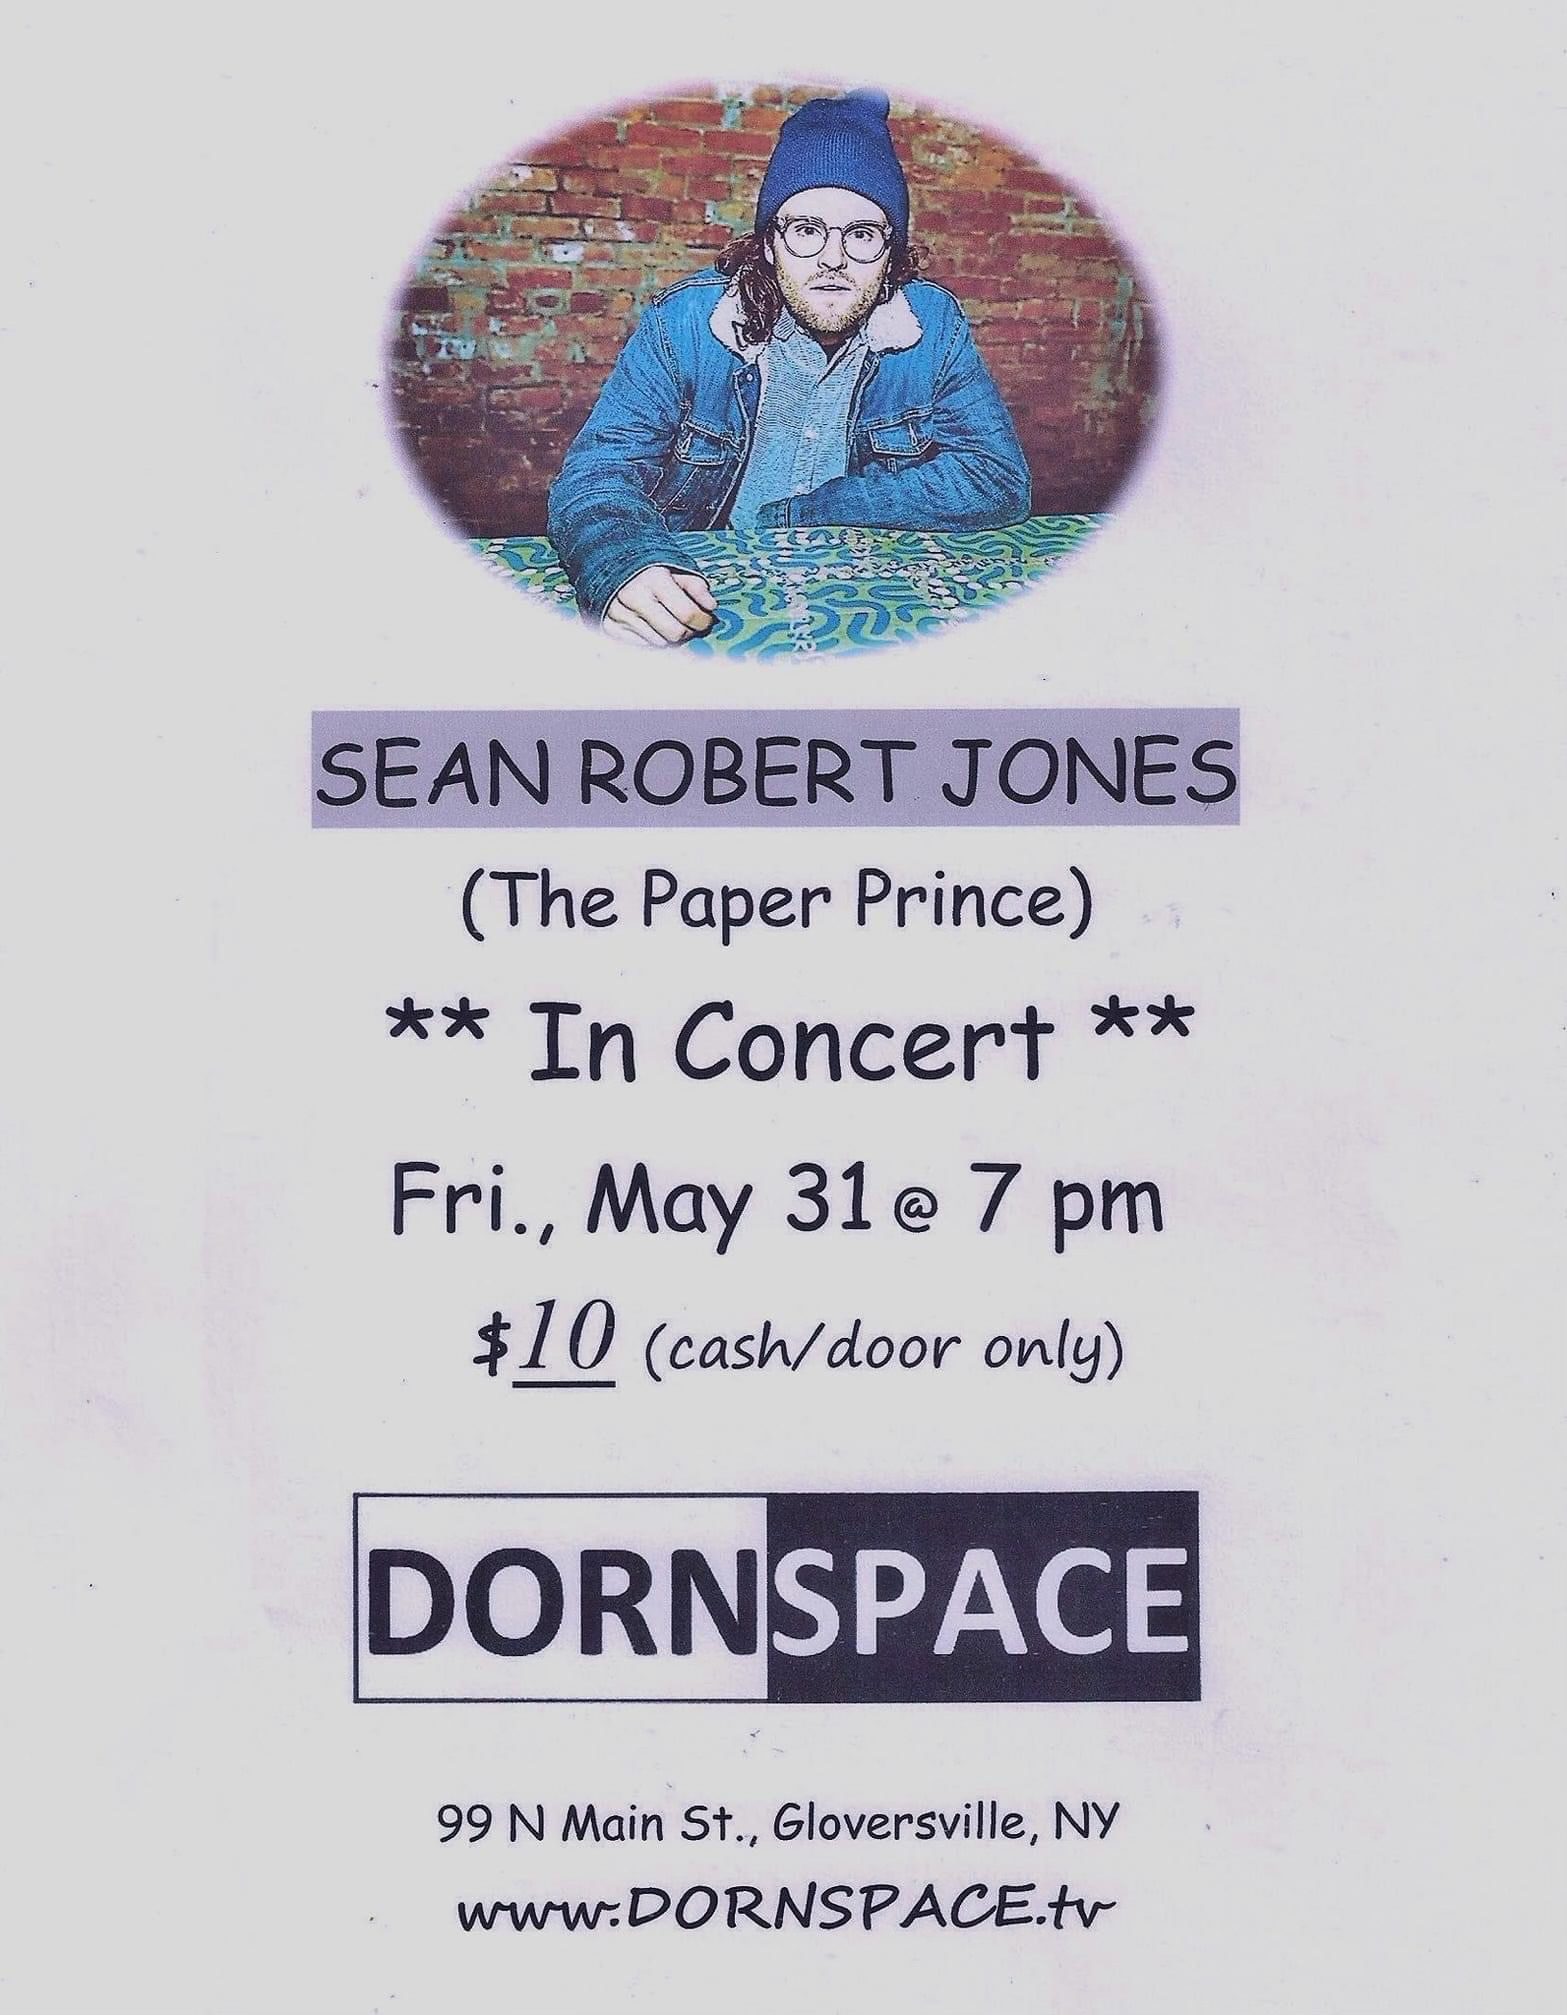 SEAN ROBERT JONES (The Paper Prince) Dorn Sdpoace Copncert, Image by Dorn Space.